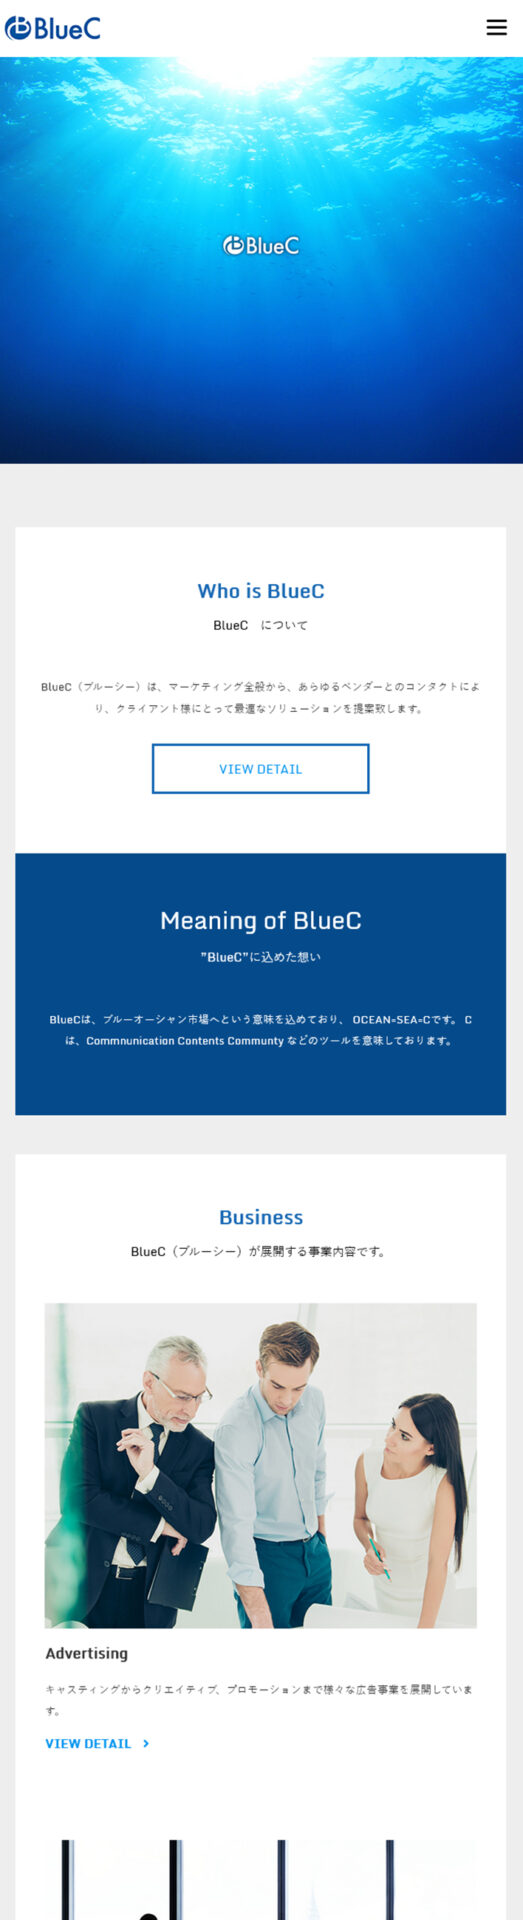 BlueC コーポレートサイト ウェブ制作実績 アイコンサルティング